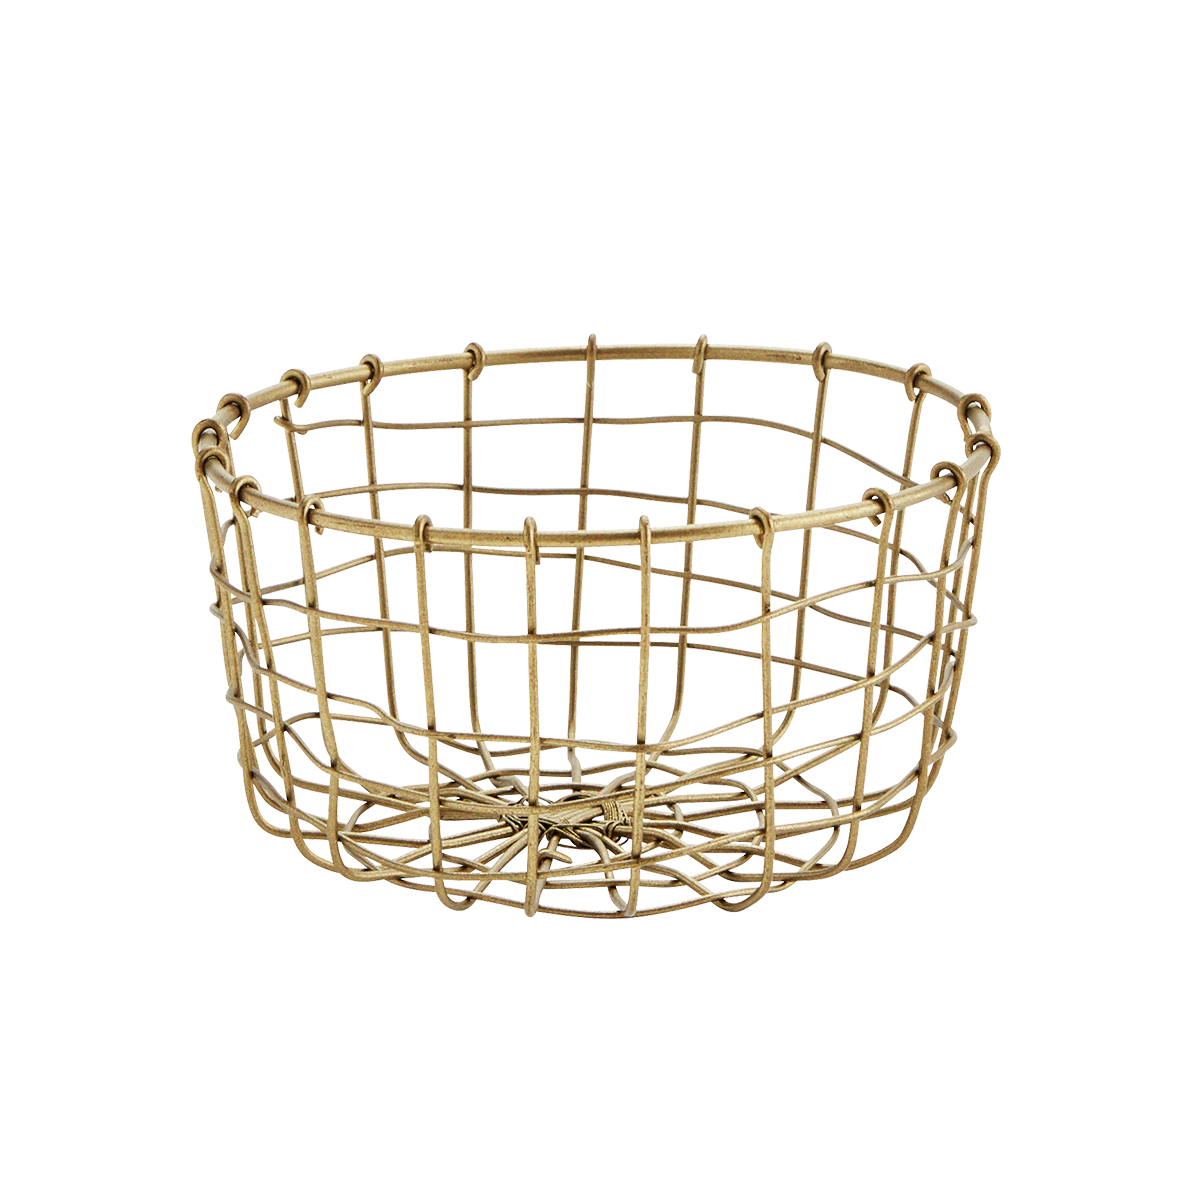 Round iron basket